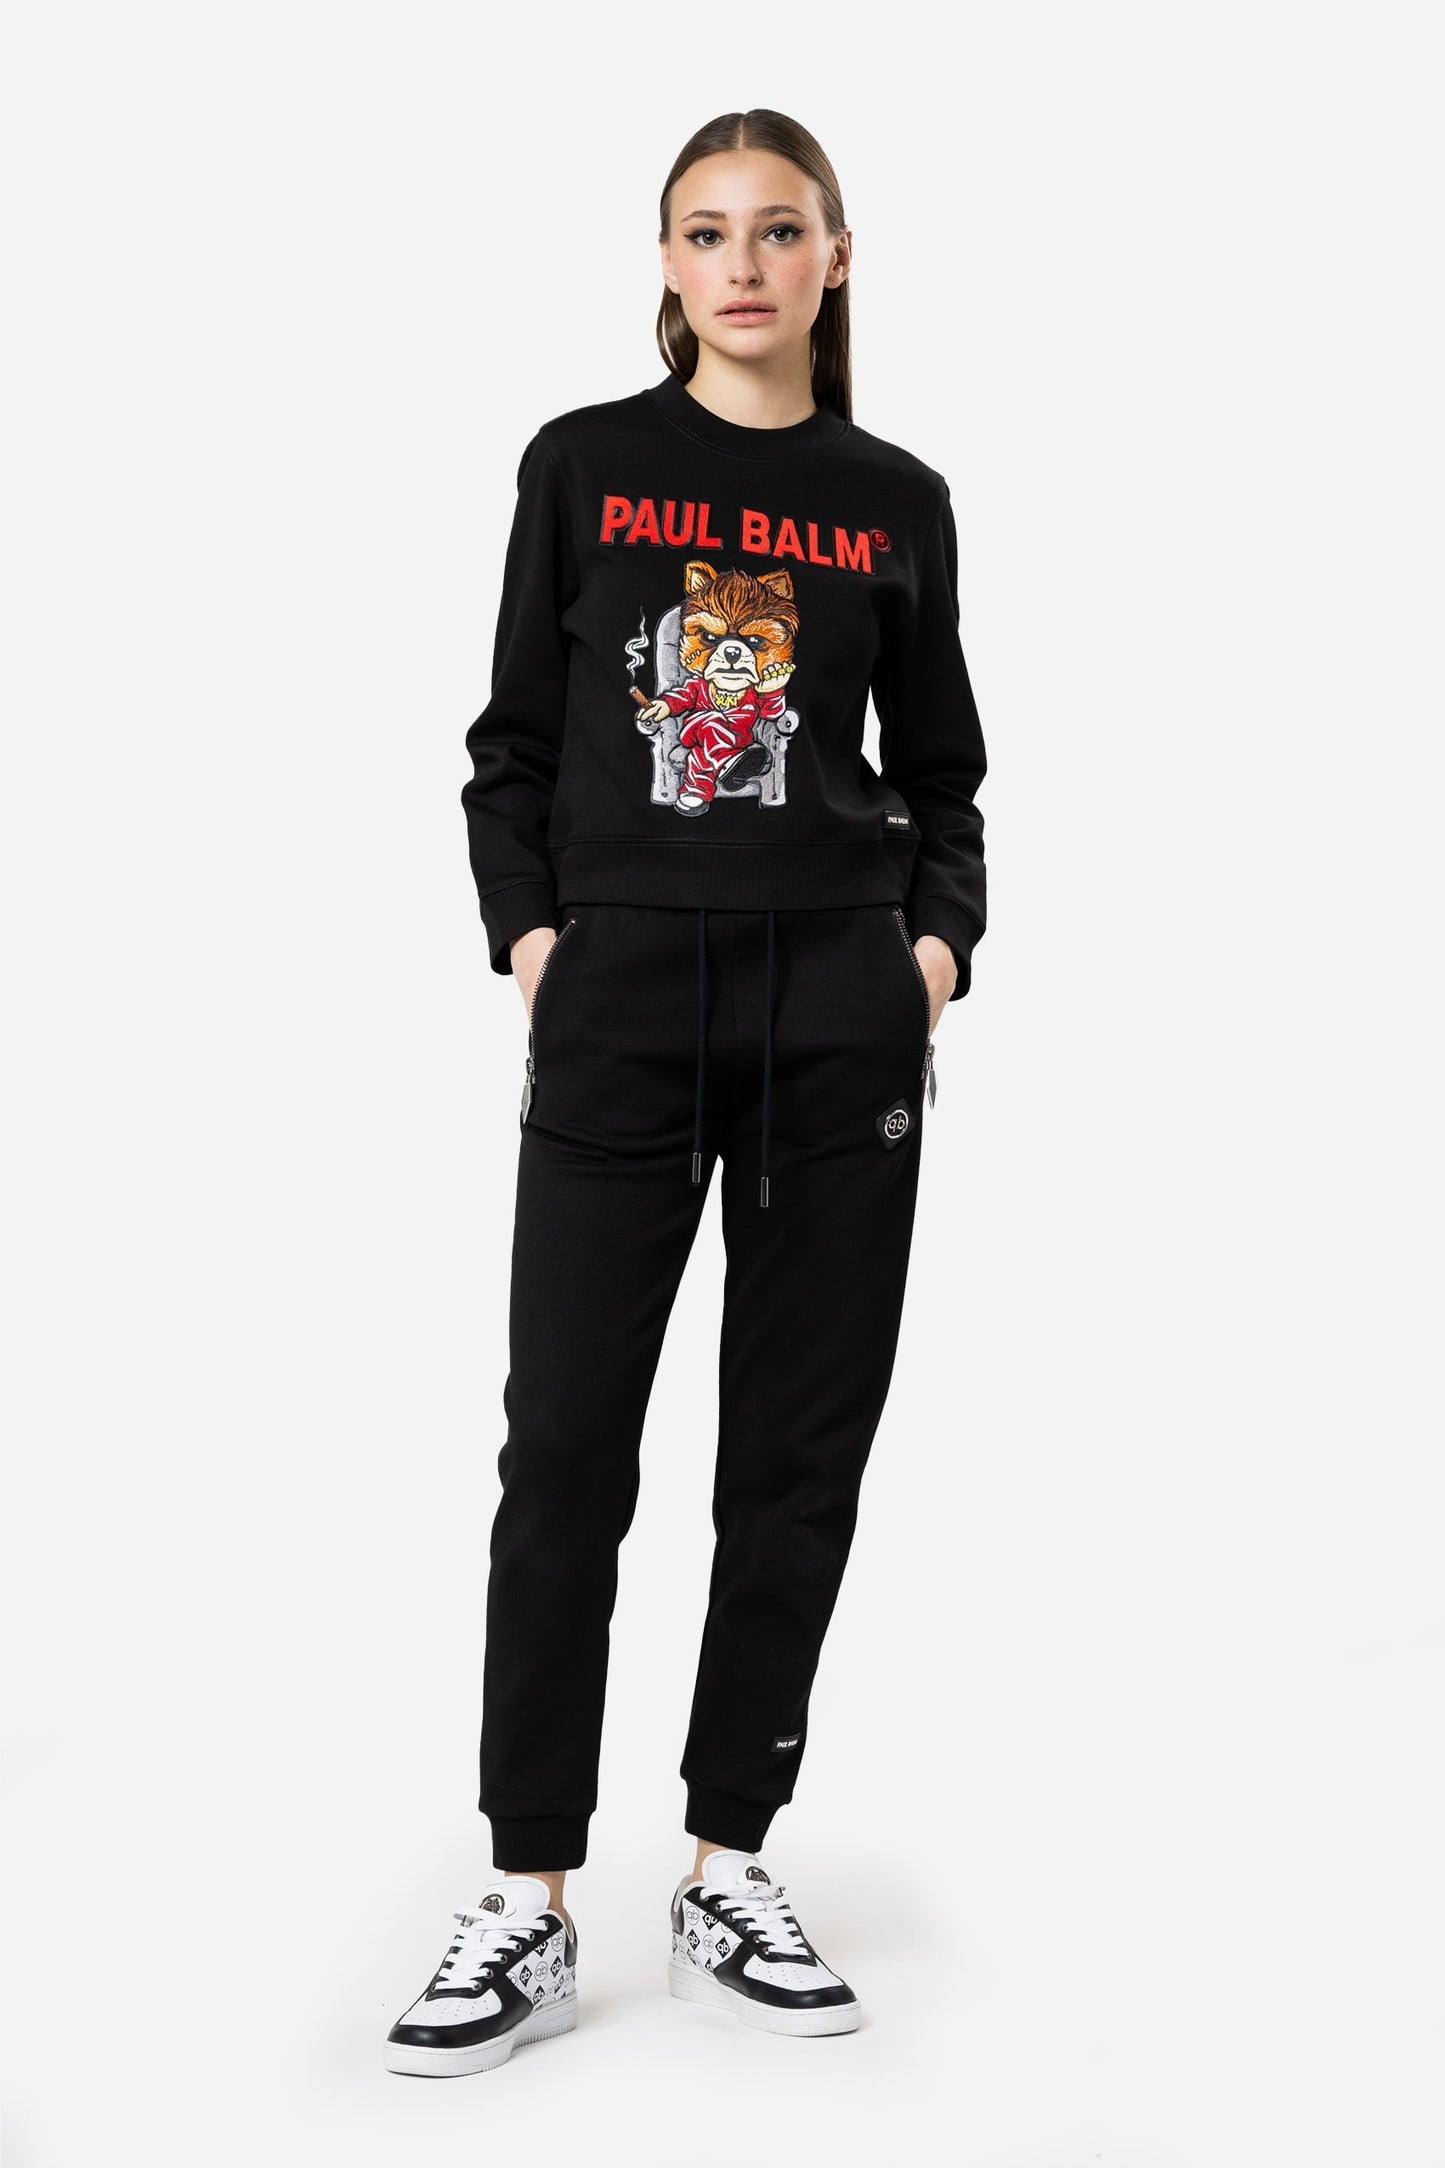 Embroidered Yuki Boss Sweatshirt - Limited to 300 - PAUL BALM WORLD